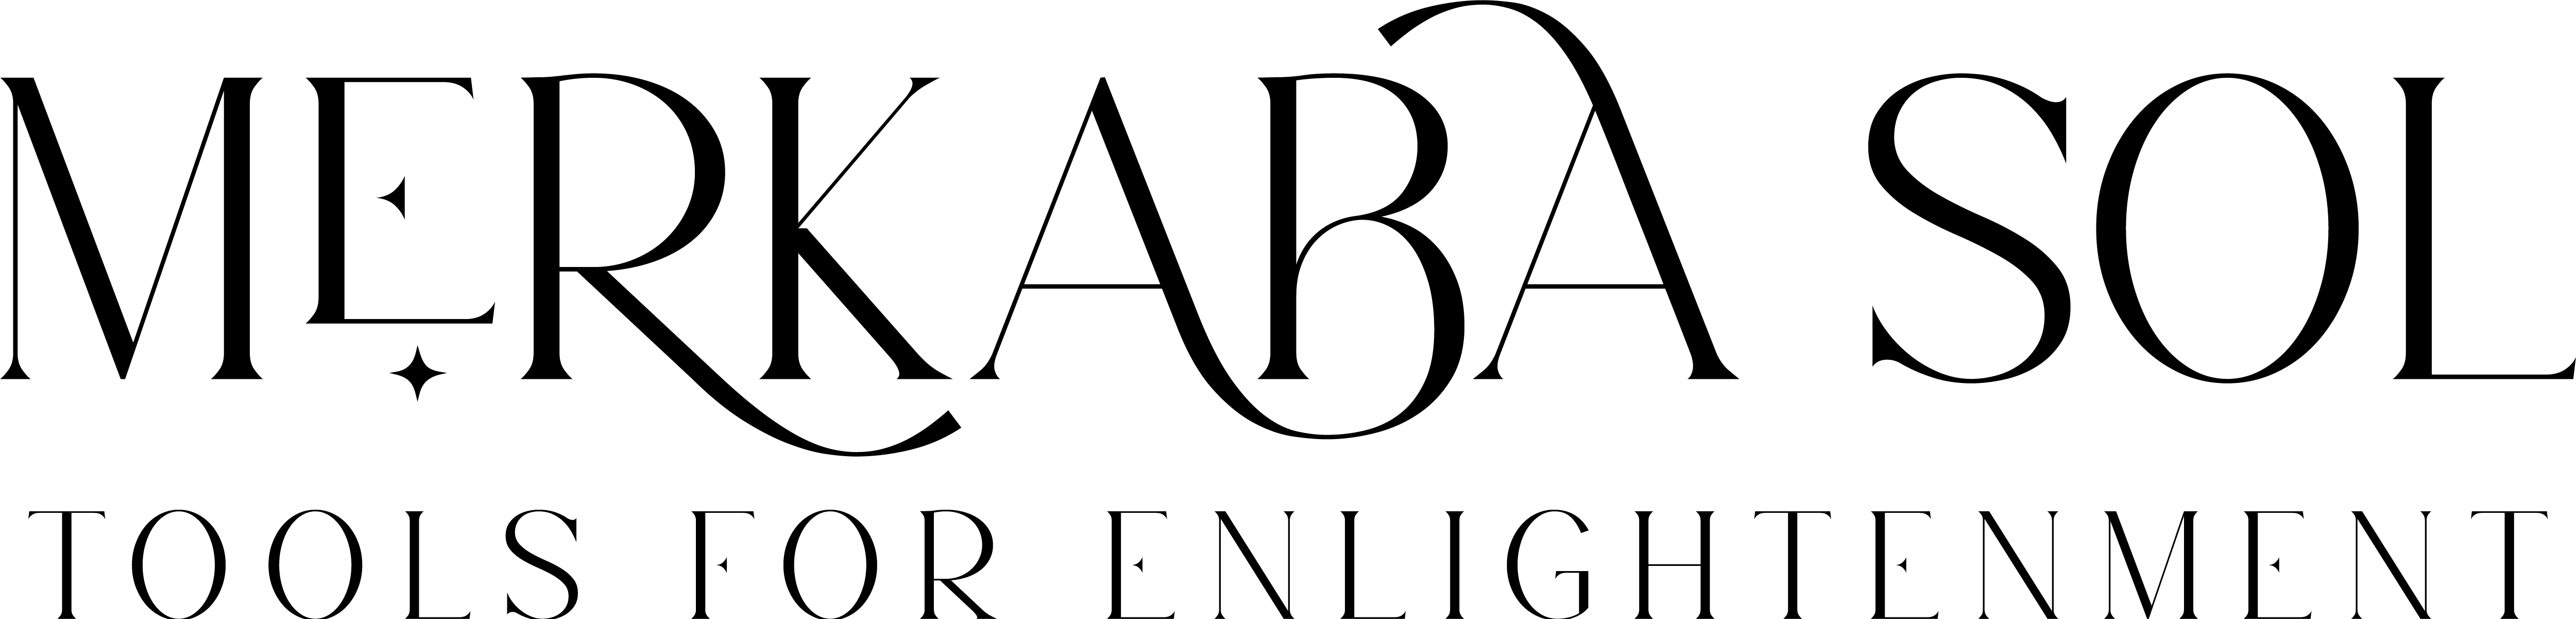 Merkaba Sol logo D9